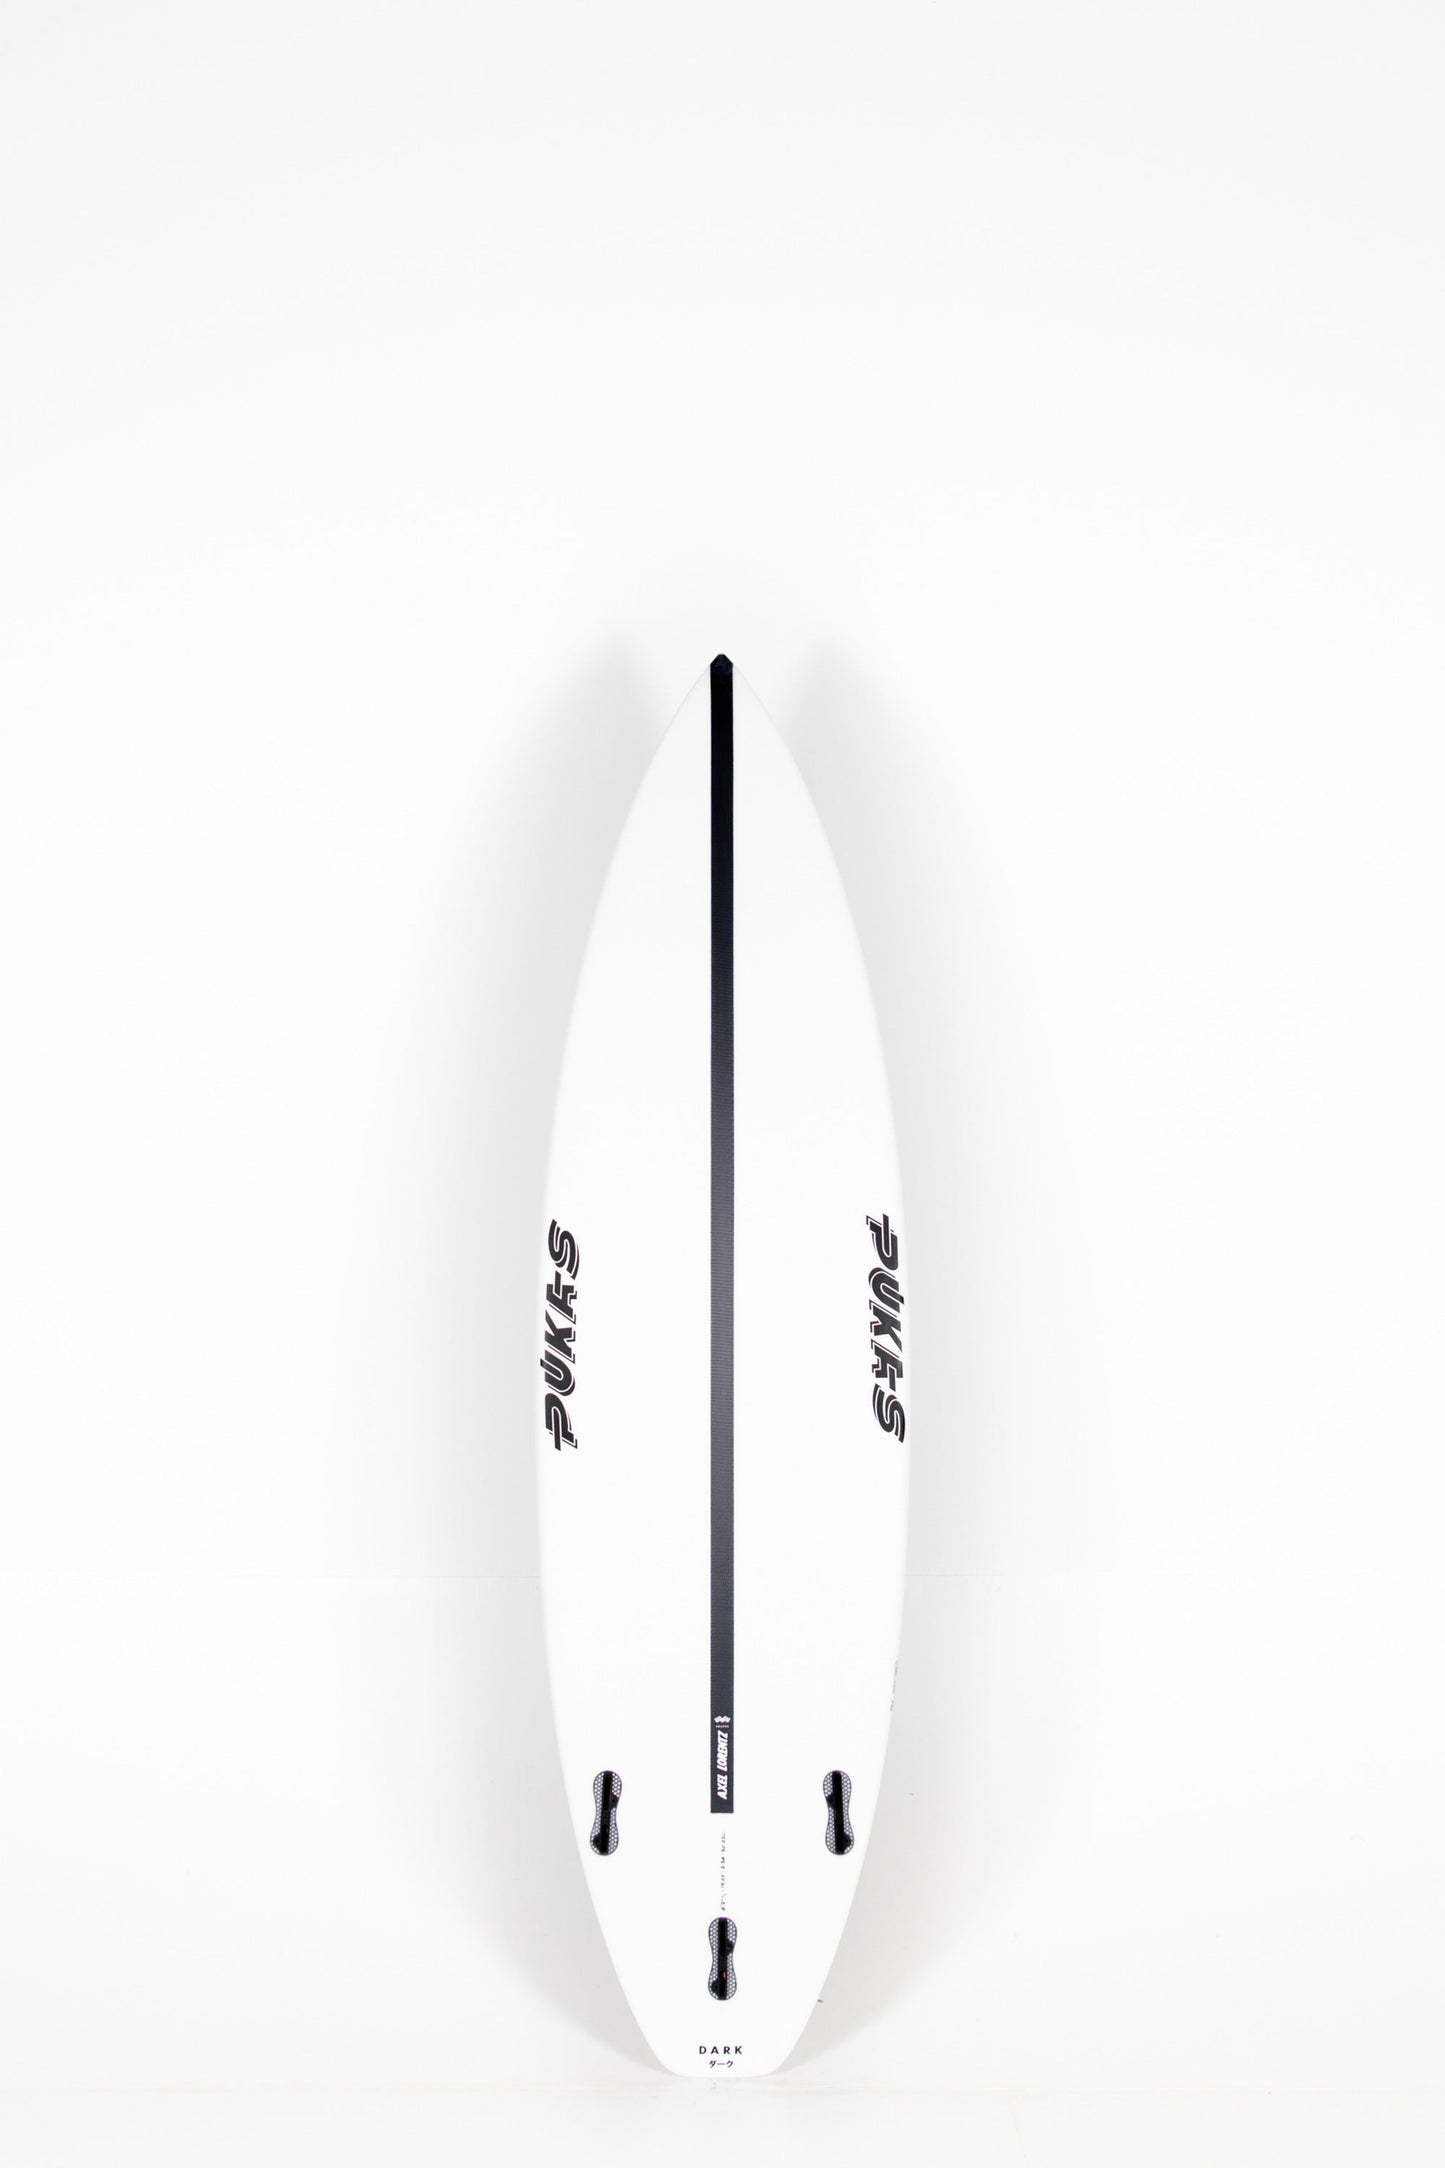 
                  
                    Pukas Surf Shop - Pukas Surfboard - INNCA Tec - DARK HP by Axel Lorentz - 6’2” 1/2 x 19,25 x 2,36 - 30,23L
                  
                